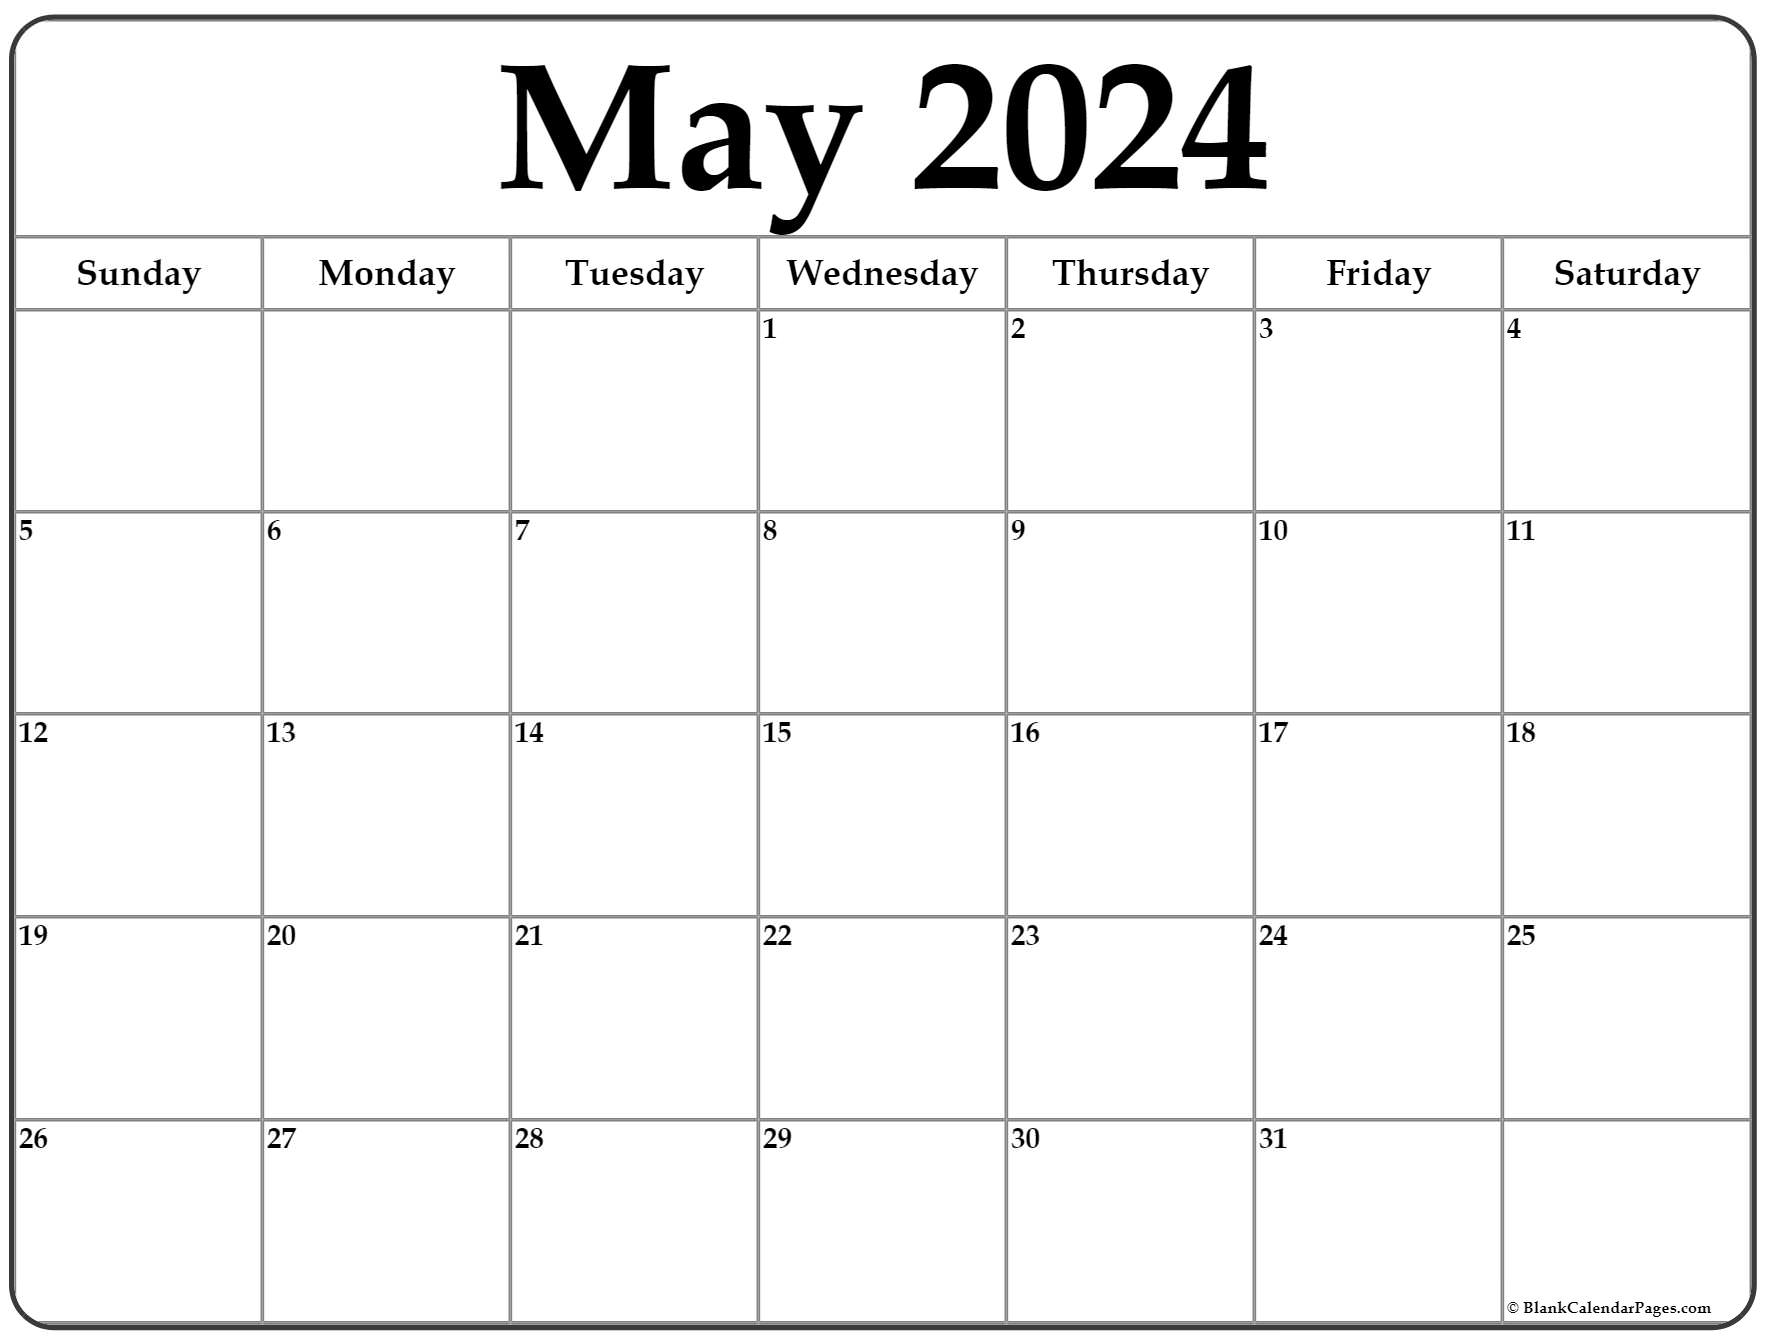 Month Of May Calendar 2022 May 2022 Calendar | Free Printable Calendar Templates